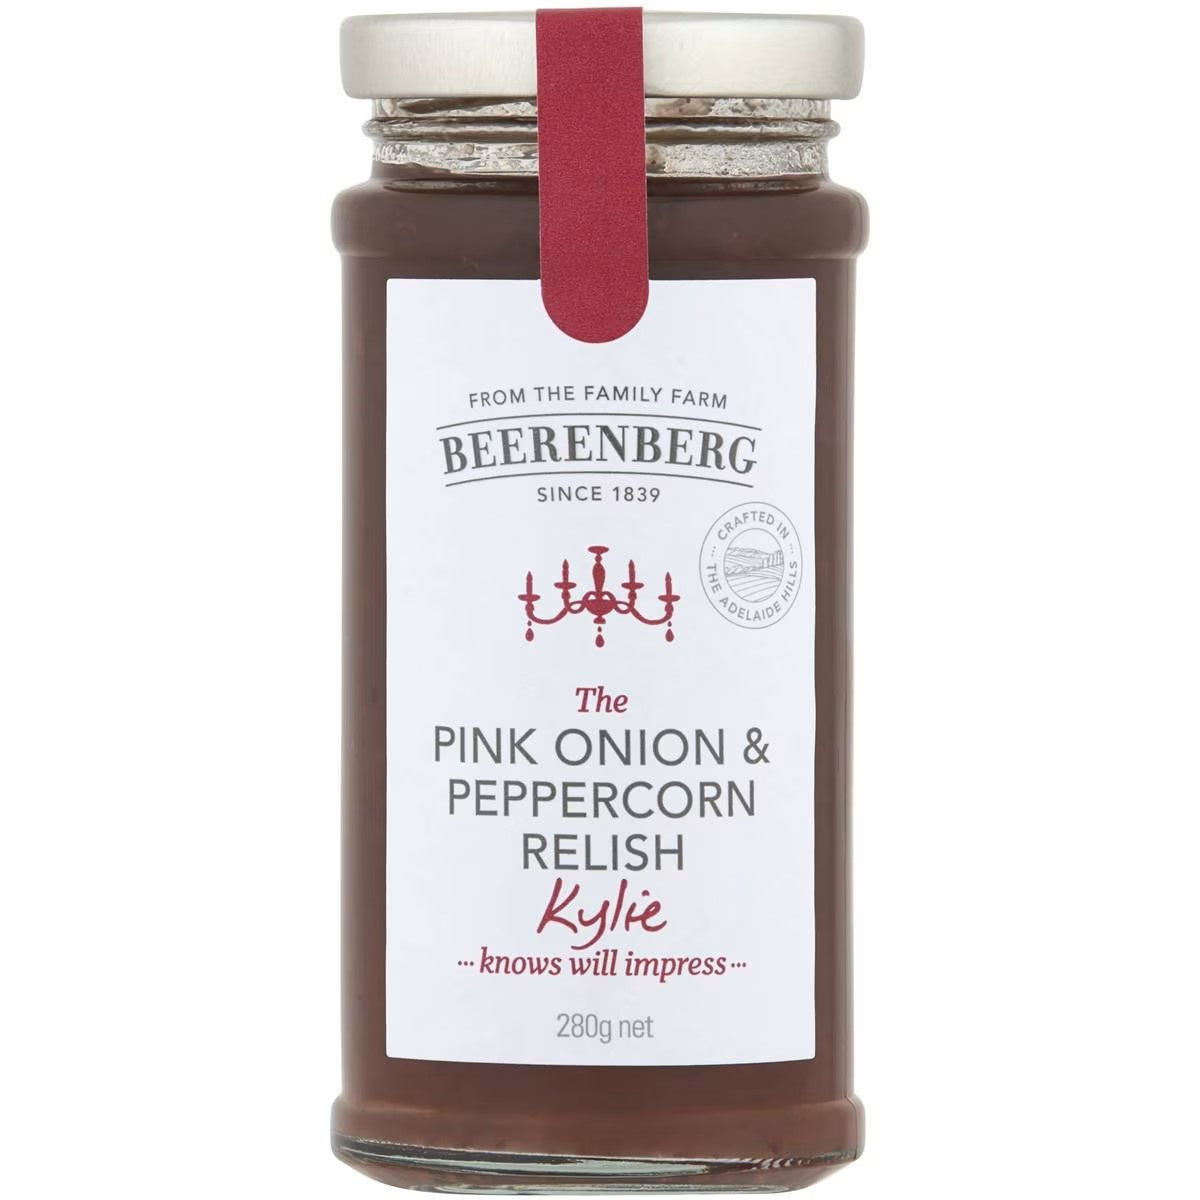 Beerenberg Pink Onion & Peppercorn Relish 265g